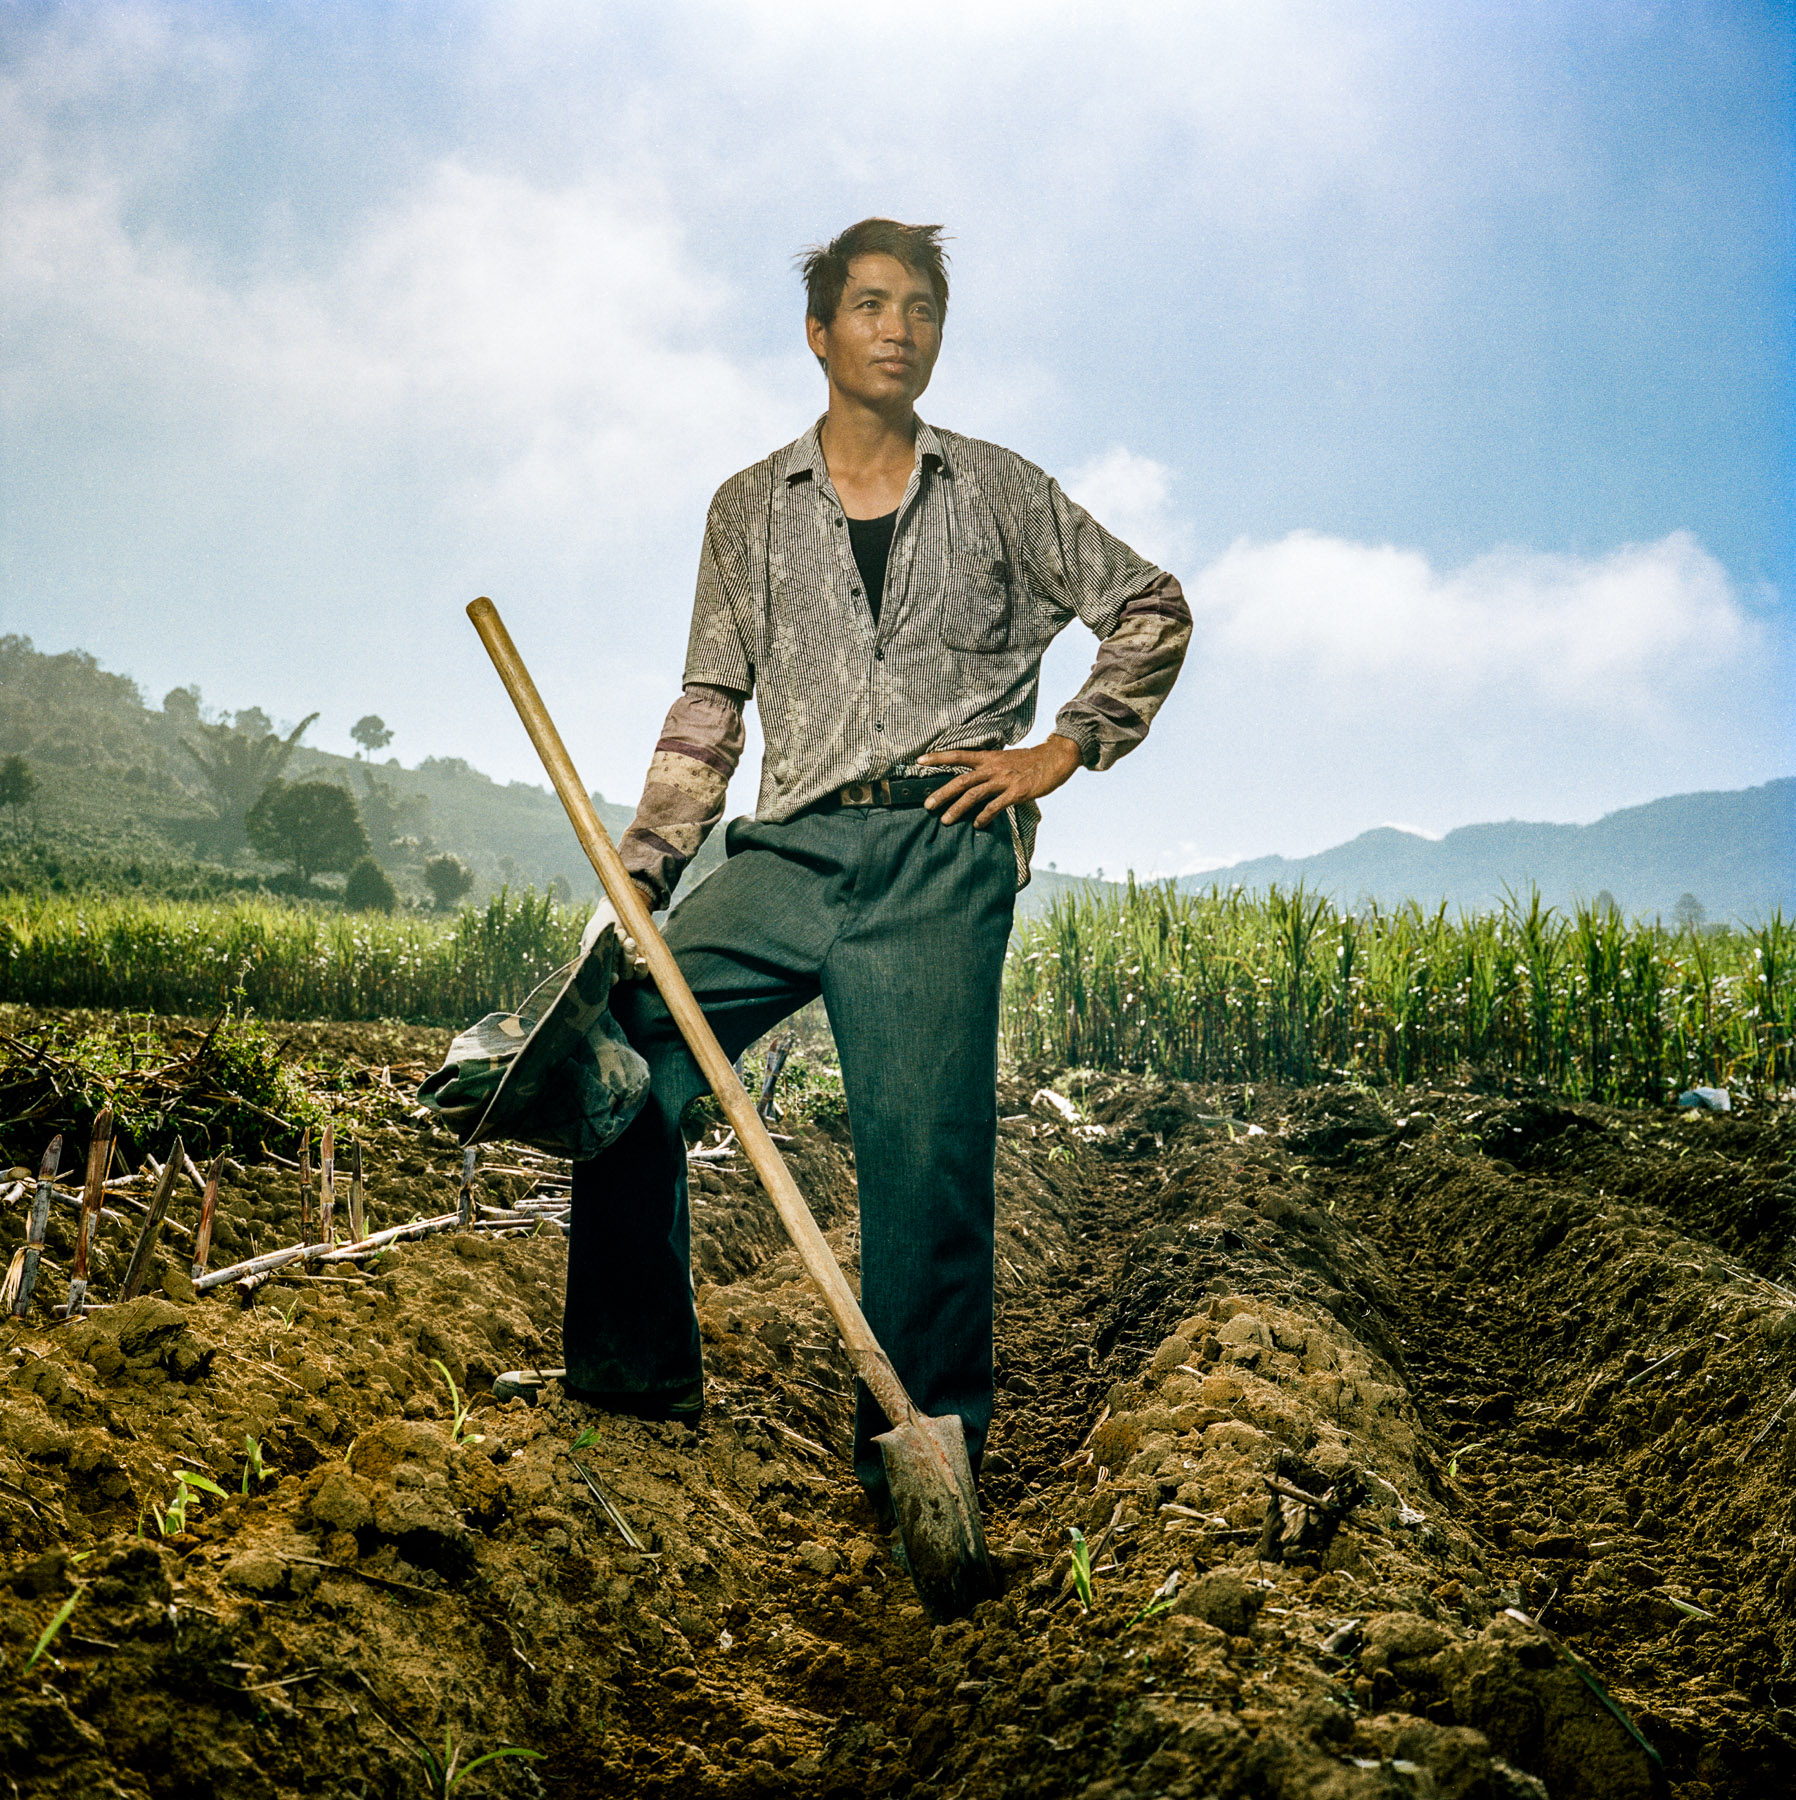  China, Yunnan province. Southern region of Xishuangbanna. Yan Pa (Chinese name) is a 43-year old farmer of the Dai minority. He was harvesting sugar canes near Mang Bang Lake when I photographed him. The Dai minority is the wealthiest minority in th